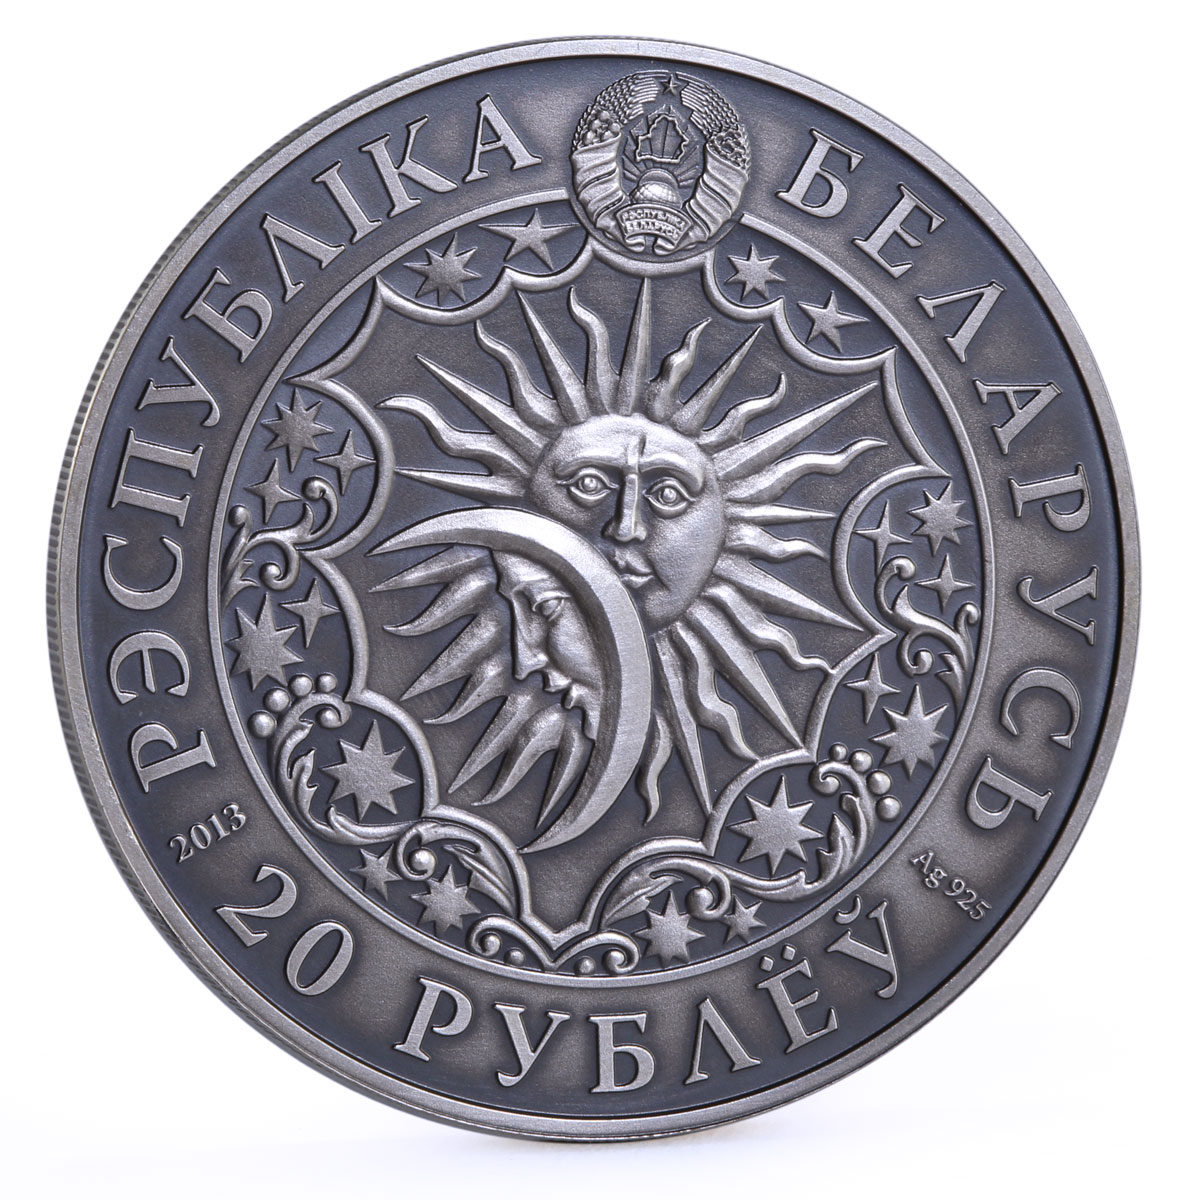 Belarus 20 rubles Zodiac Singns series Sagittarius silver coin 2013